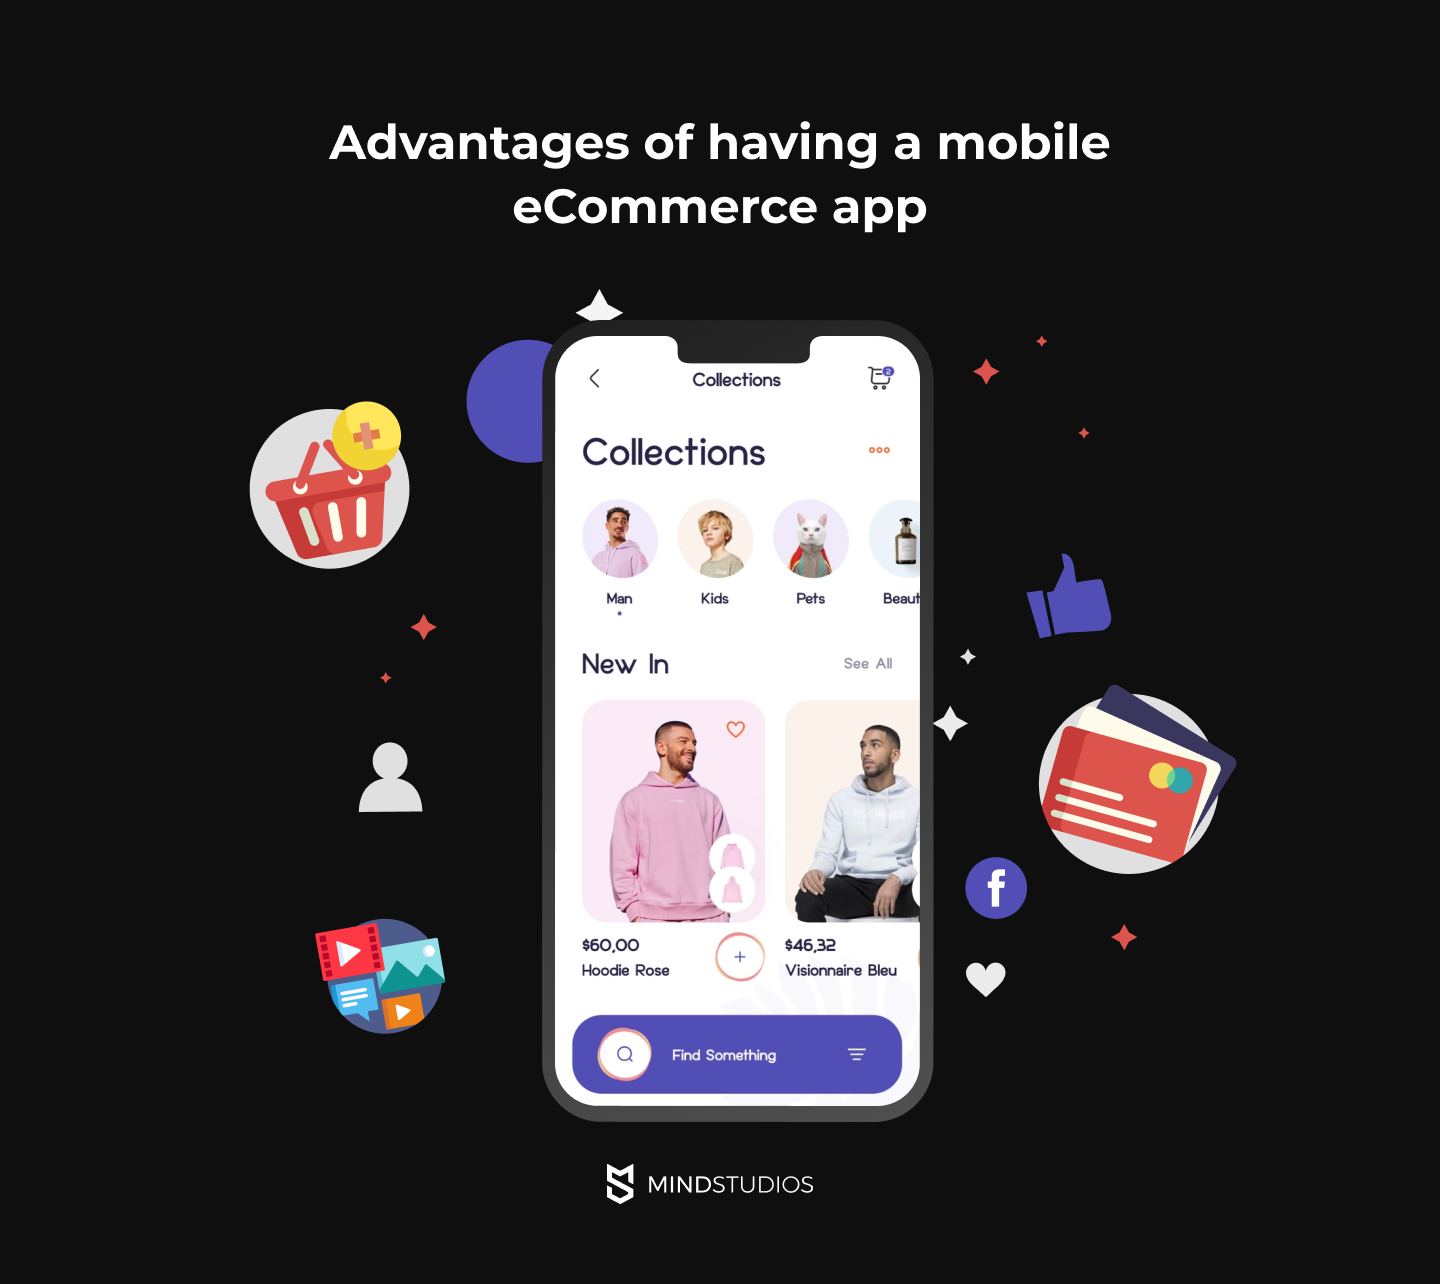 Advantages of having a mobile eCommerce app